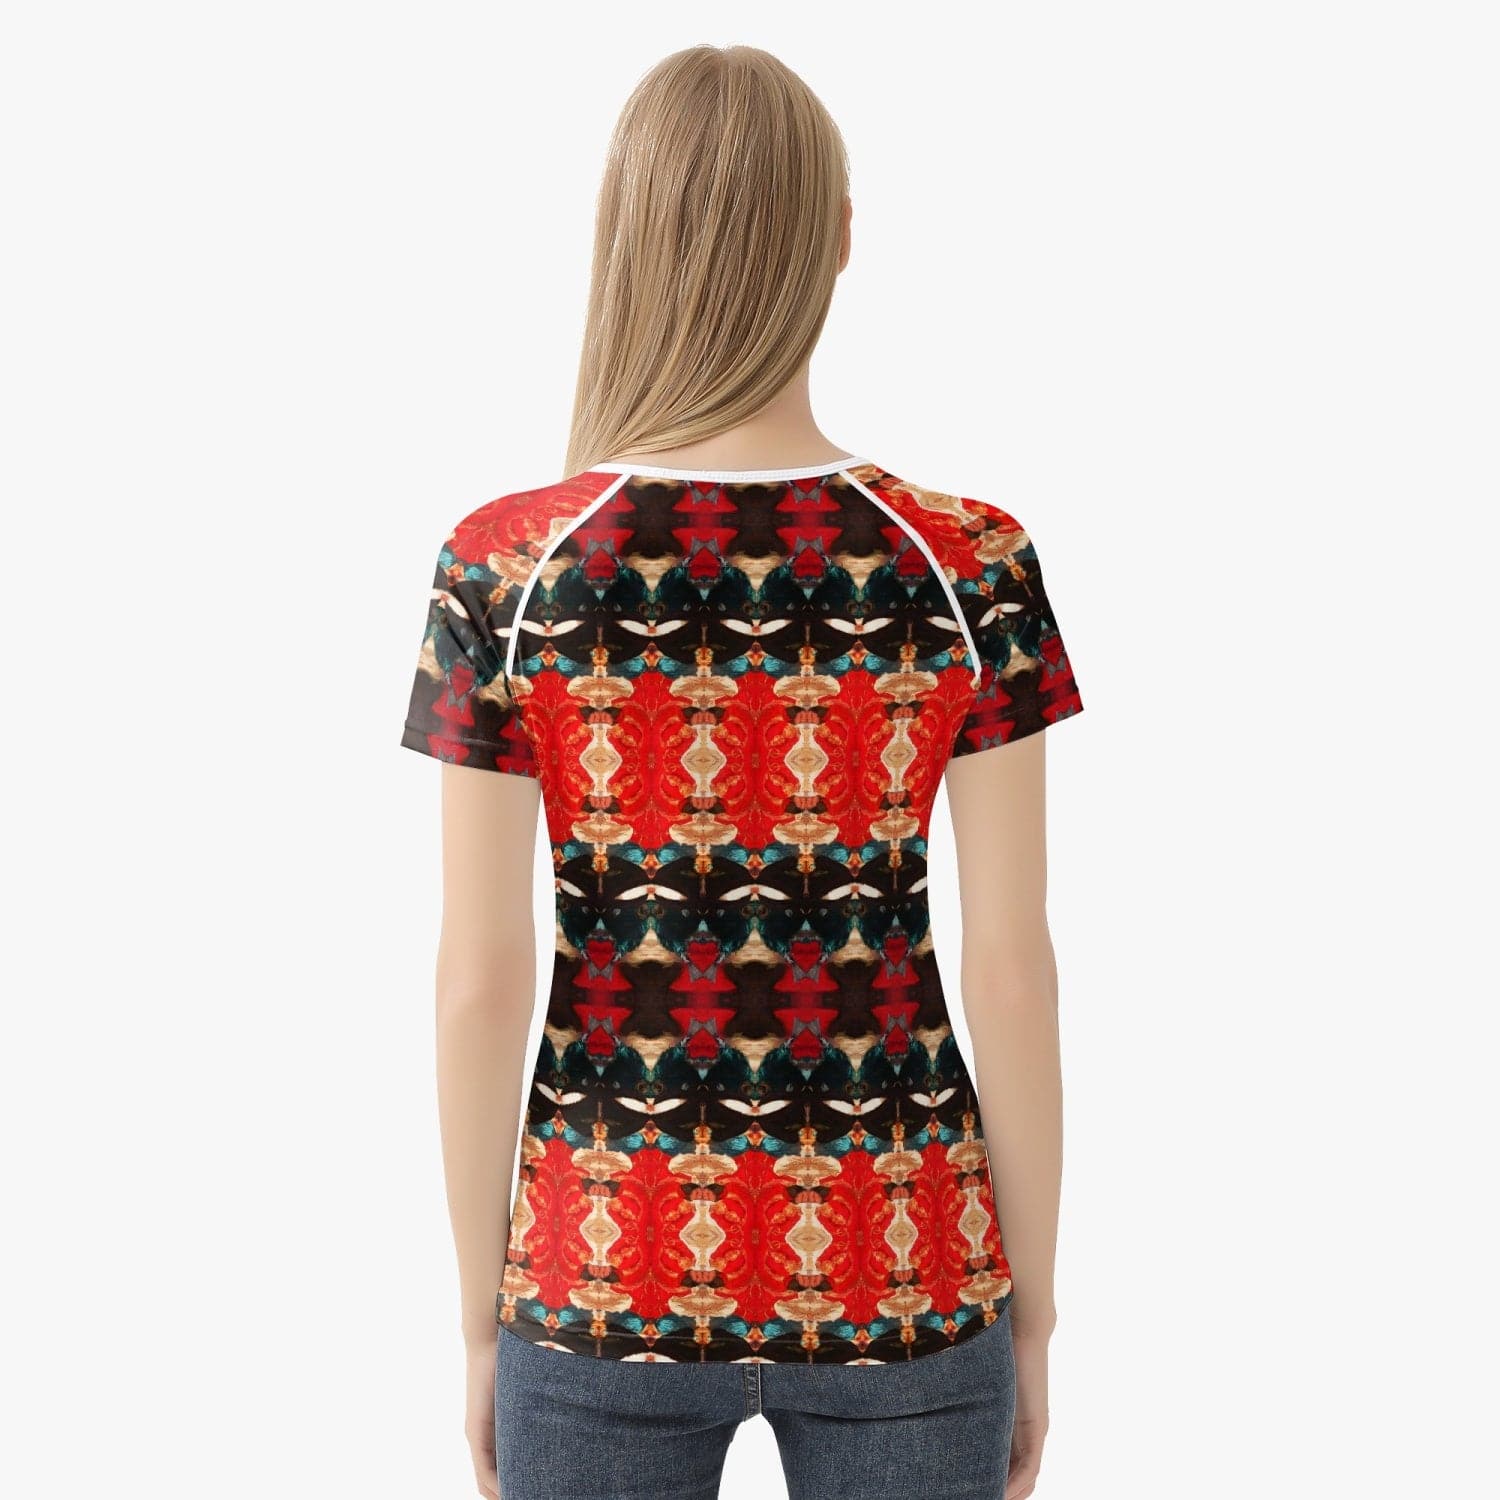 Red Orange and Black Hymalaian Patterned, Handmade Hot Women T-shirt Sports/ Yoga Top, by Sensus Studio Design